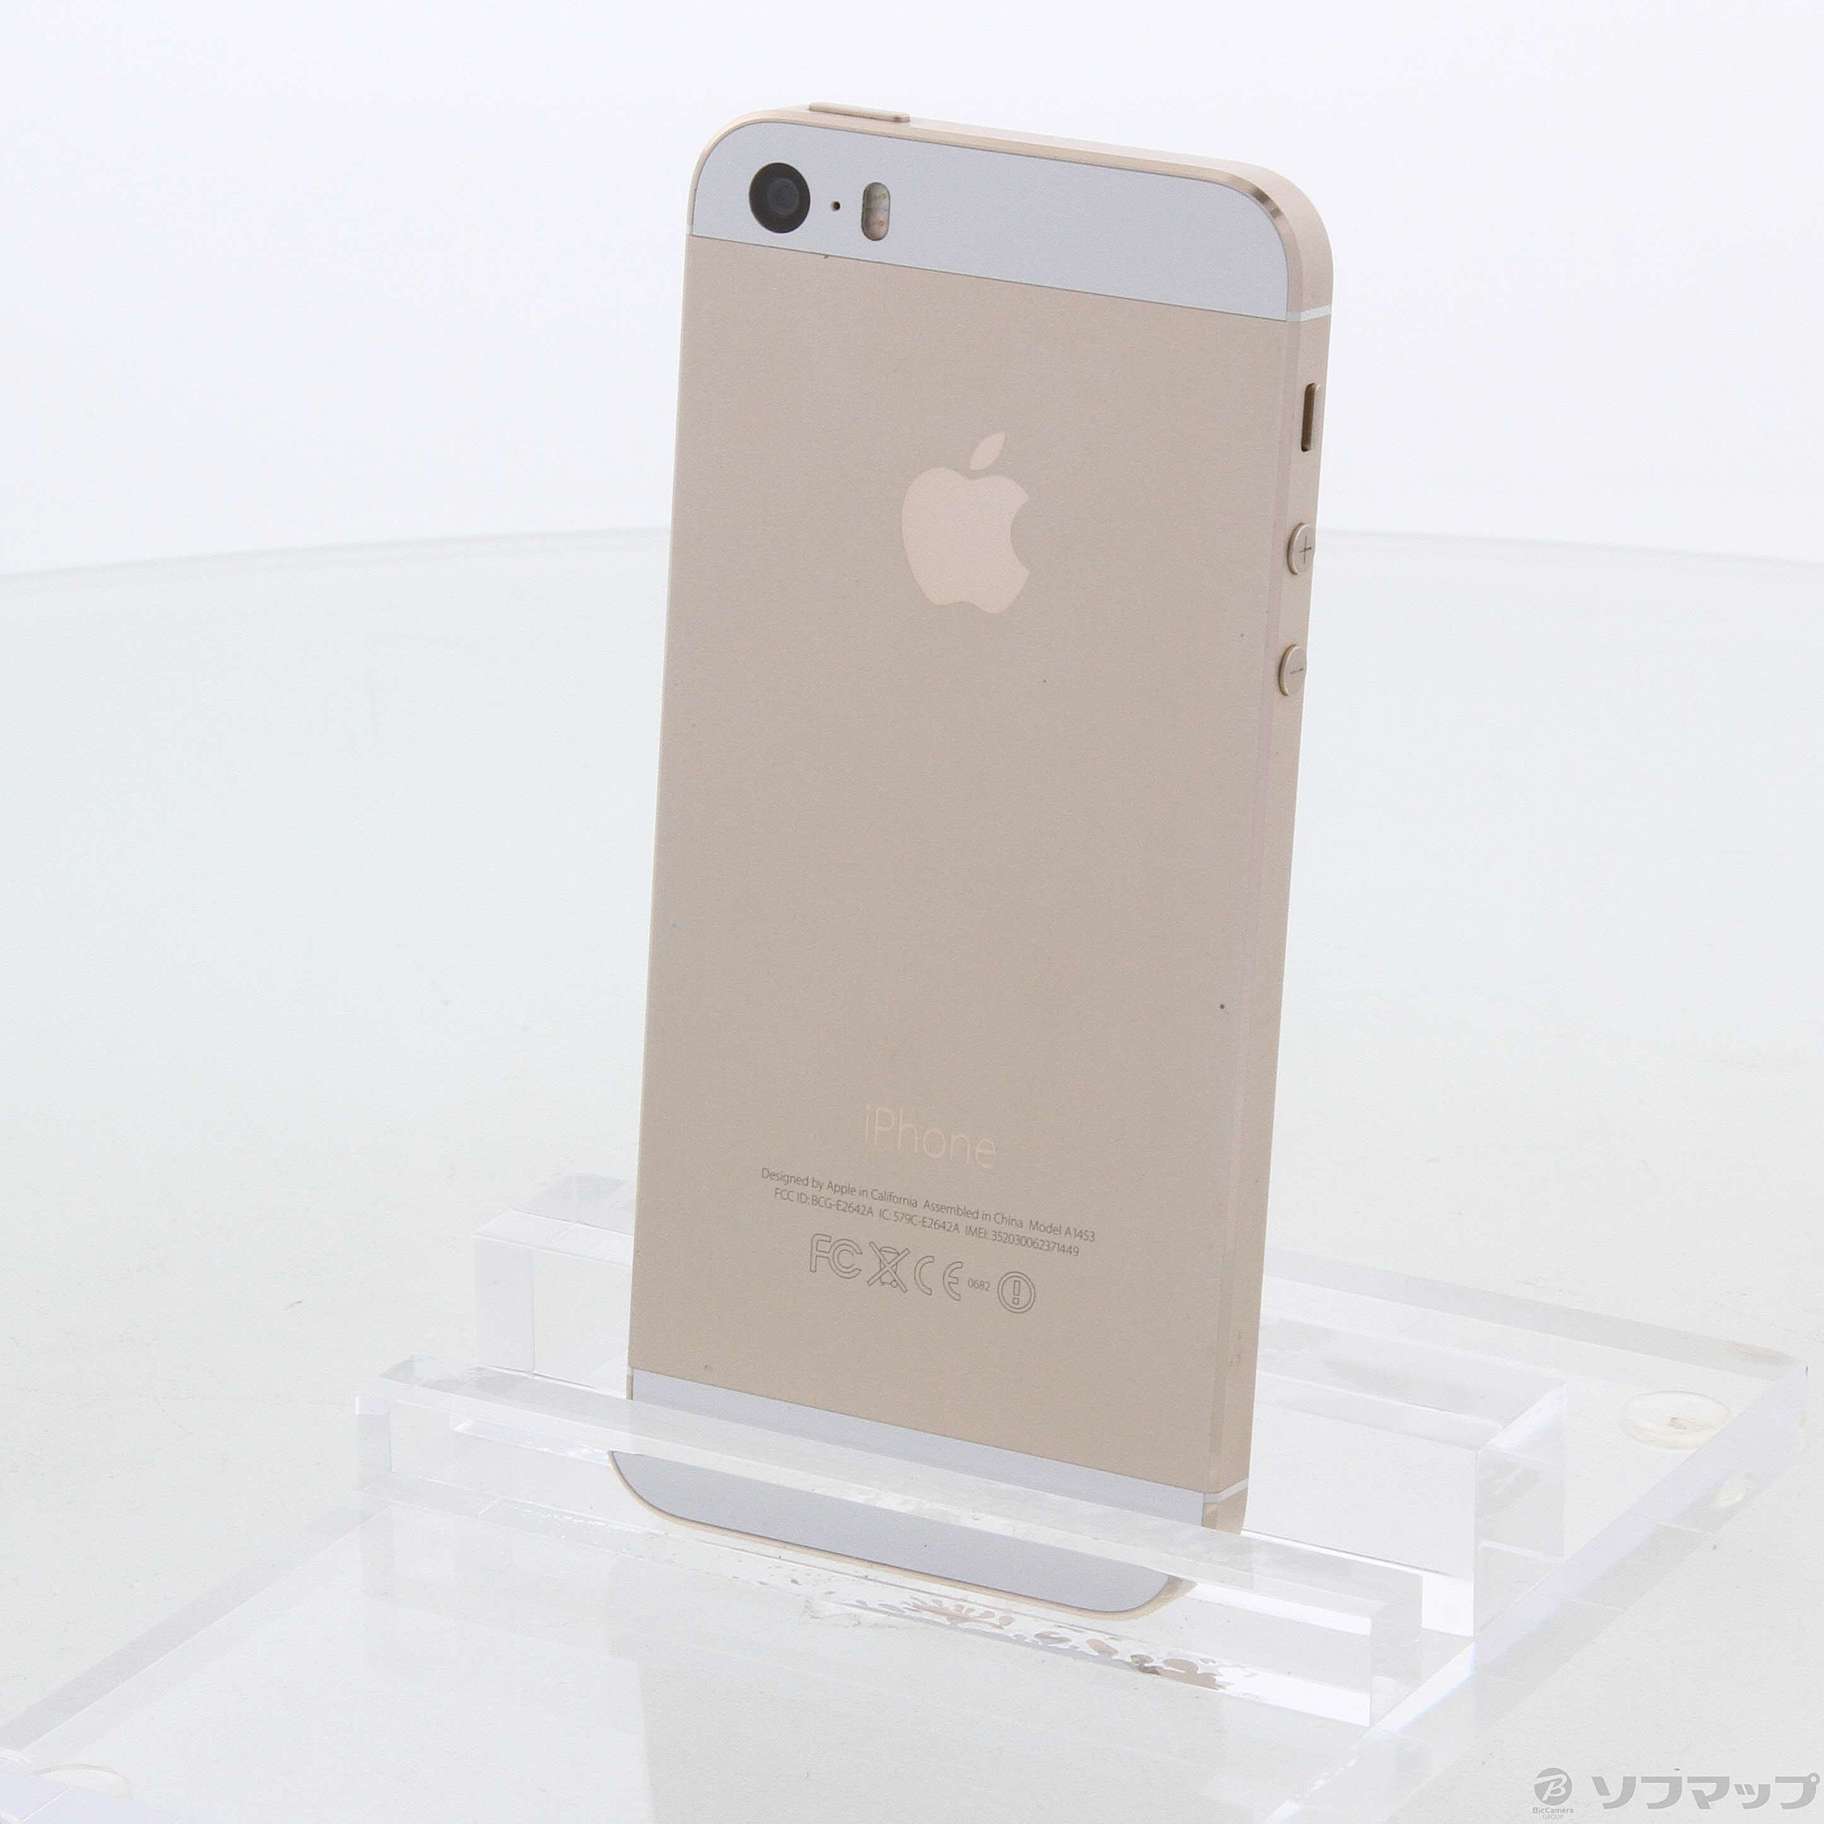 Apple iPhone 5s Gold 32 GB SIMフリー - スマートフォン本体